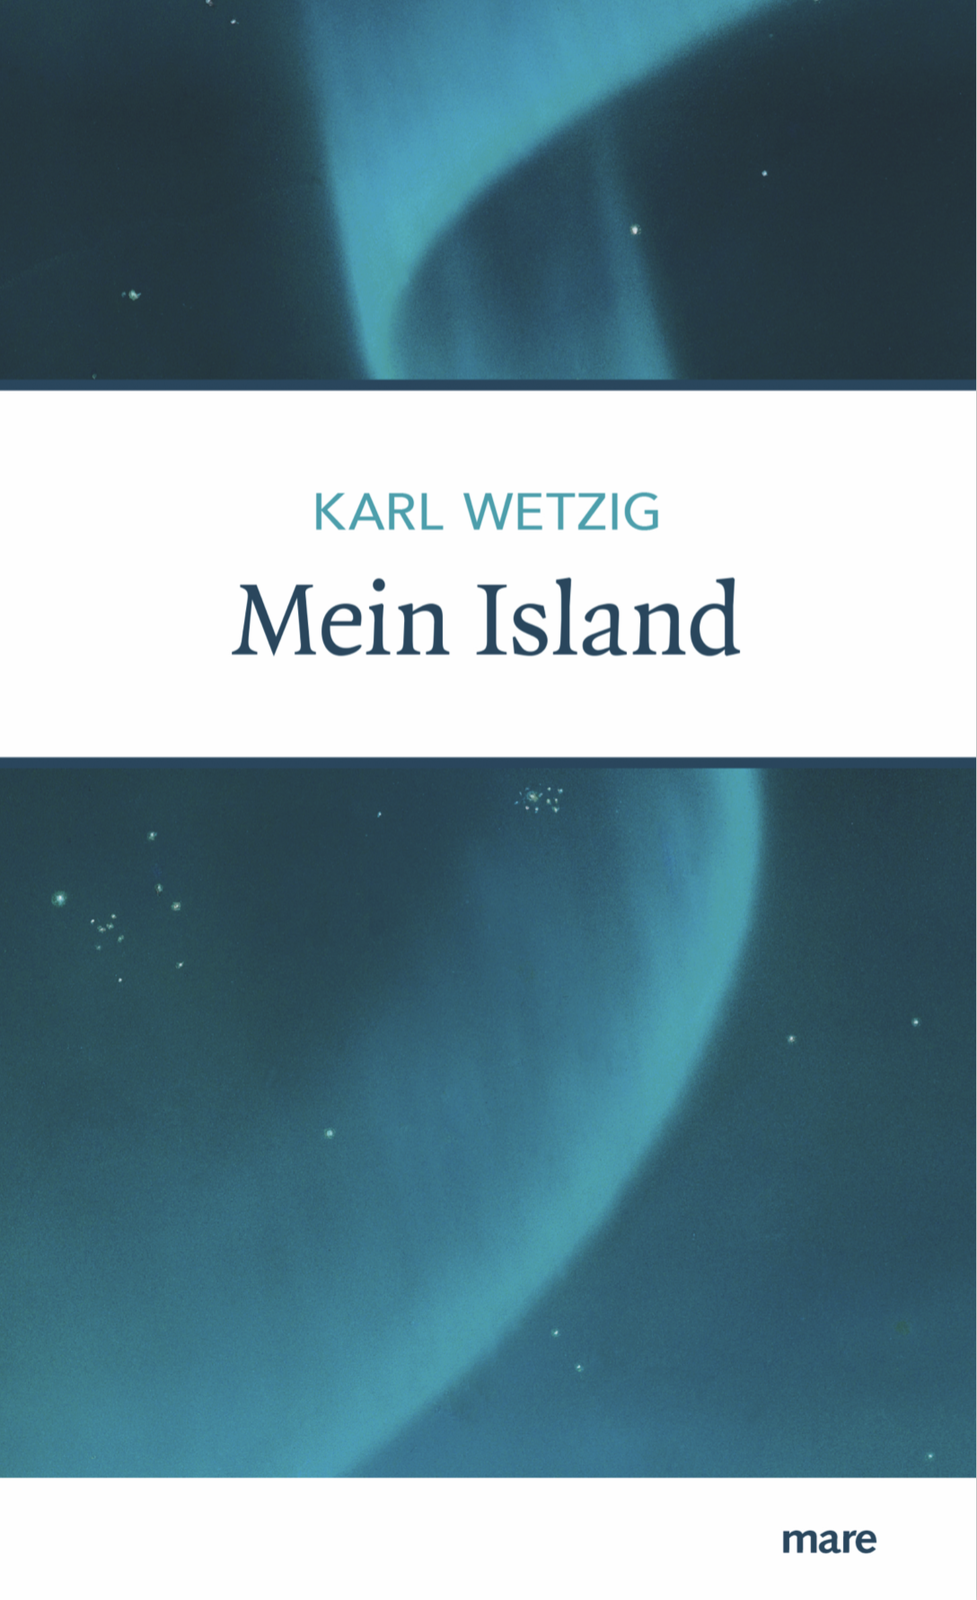 Karl Wetzig, Wetzig, Blau, Mein Island, Island